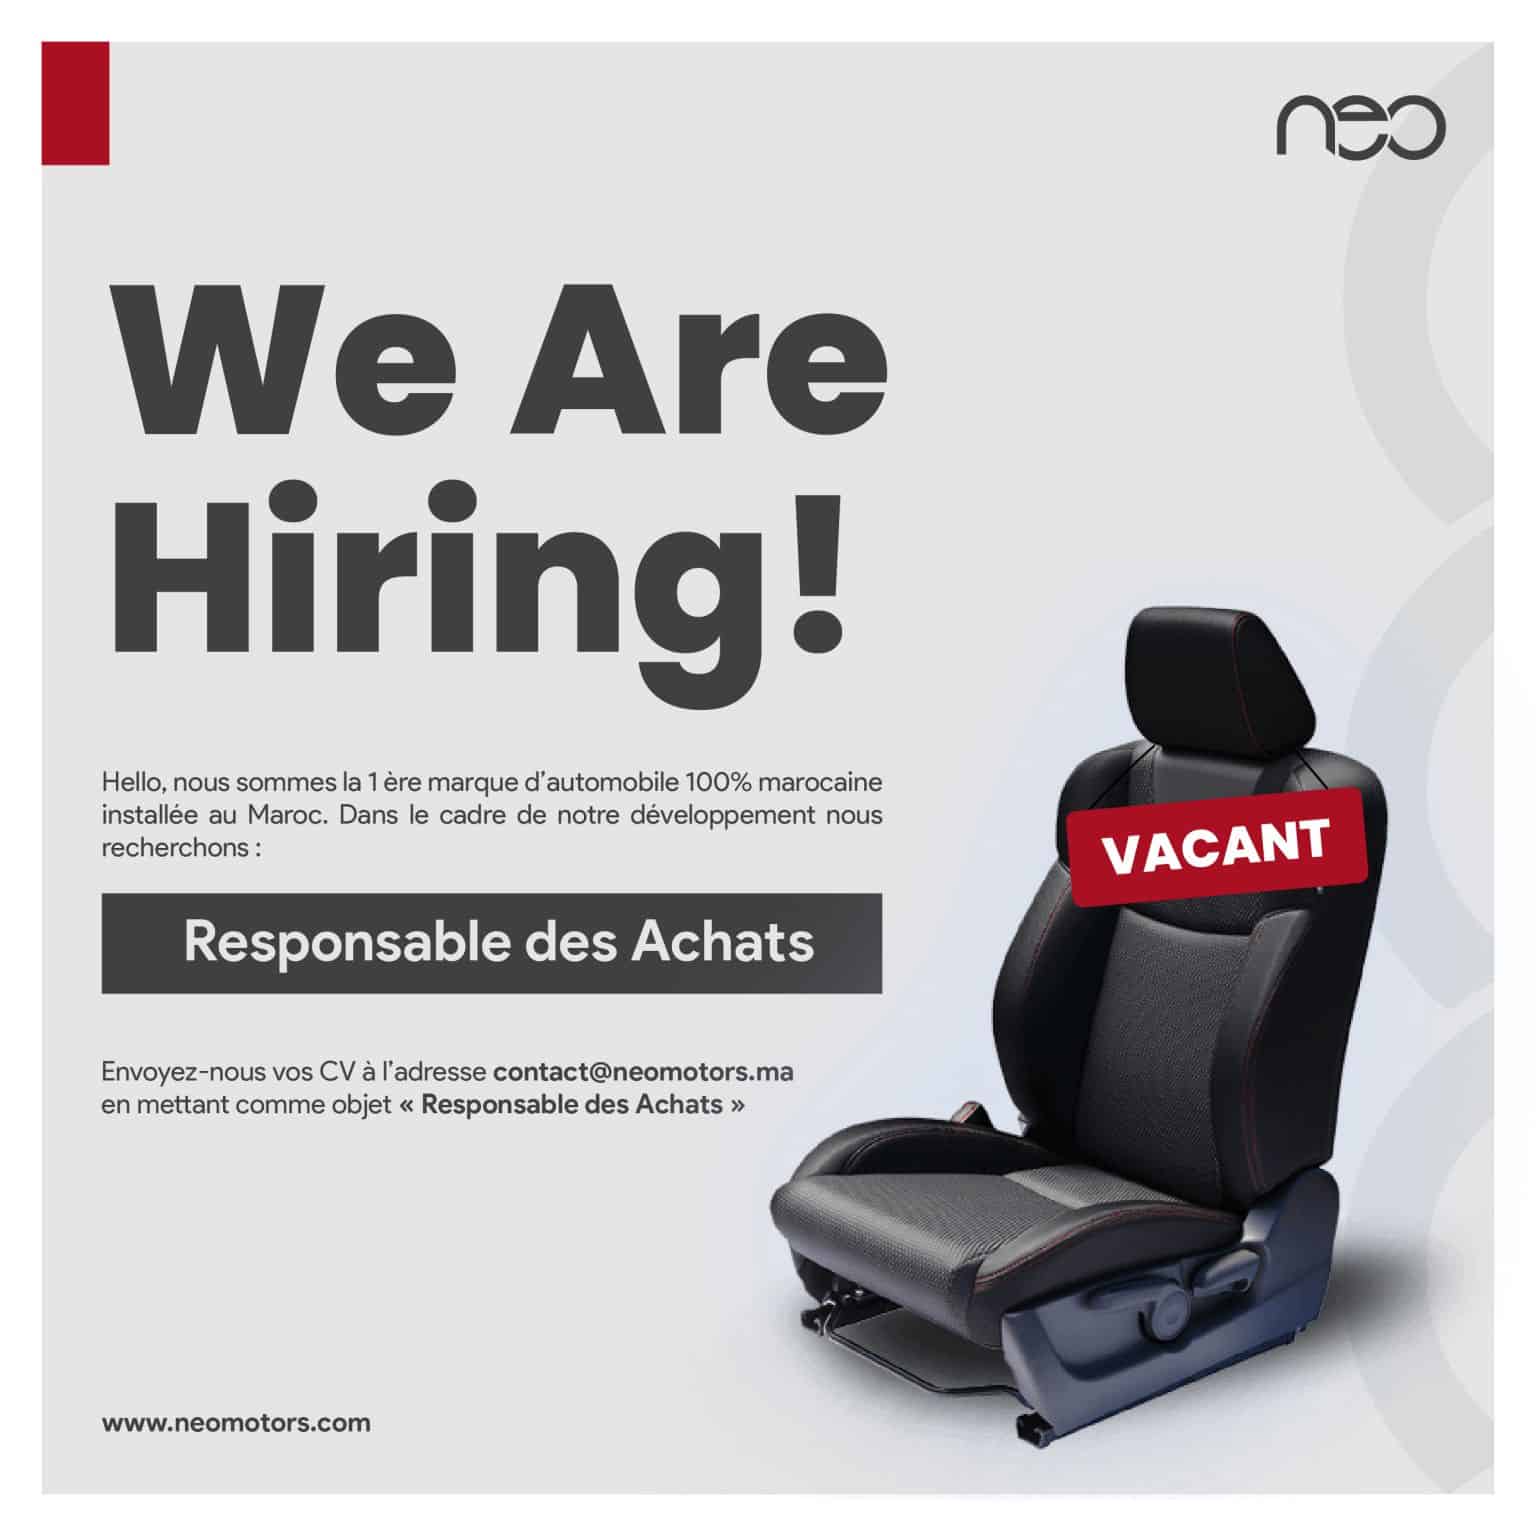 Neo Motors recrute : Responsable des Achats